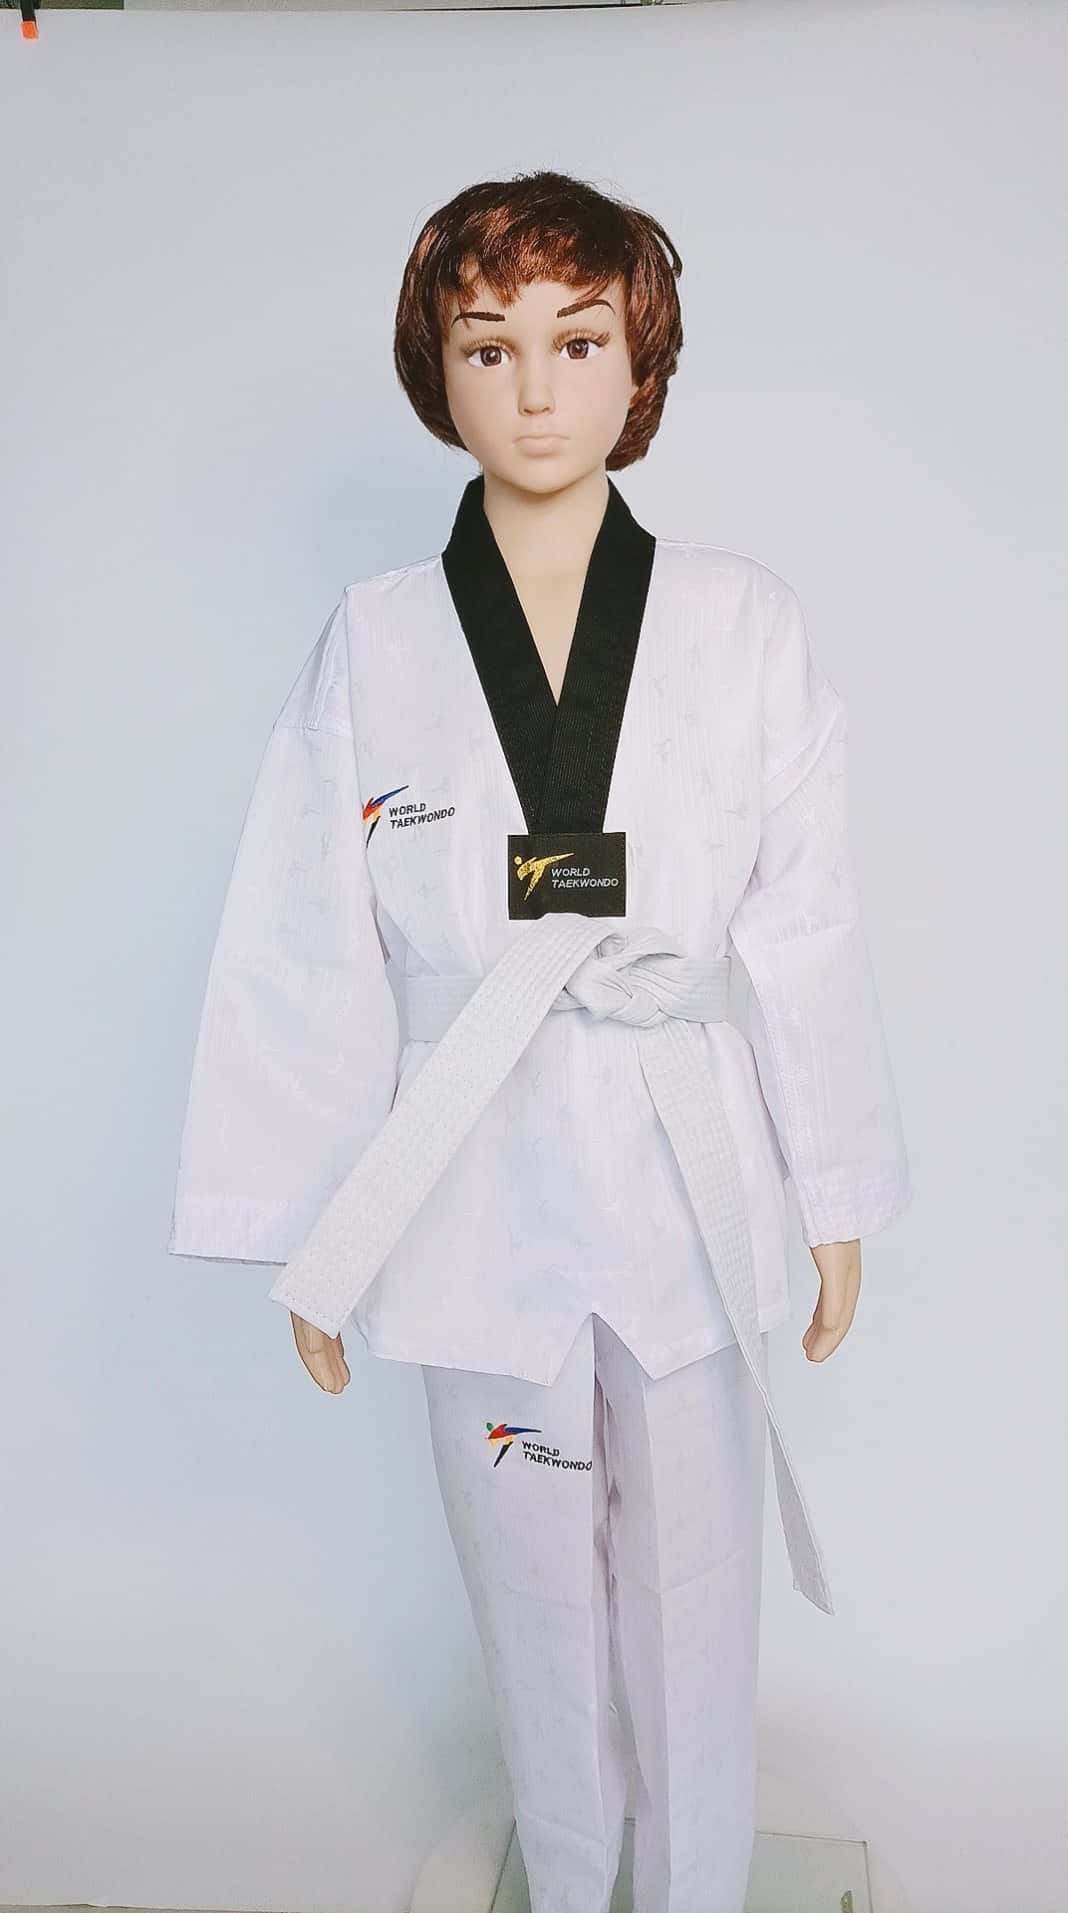 A Taekwondo Uniform ready for action Wallpaper